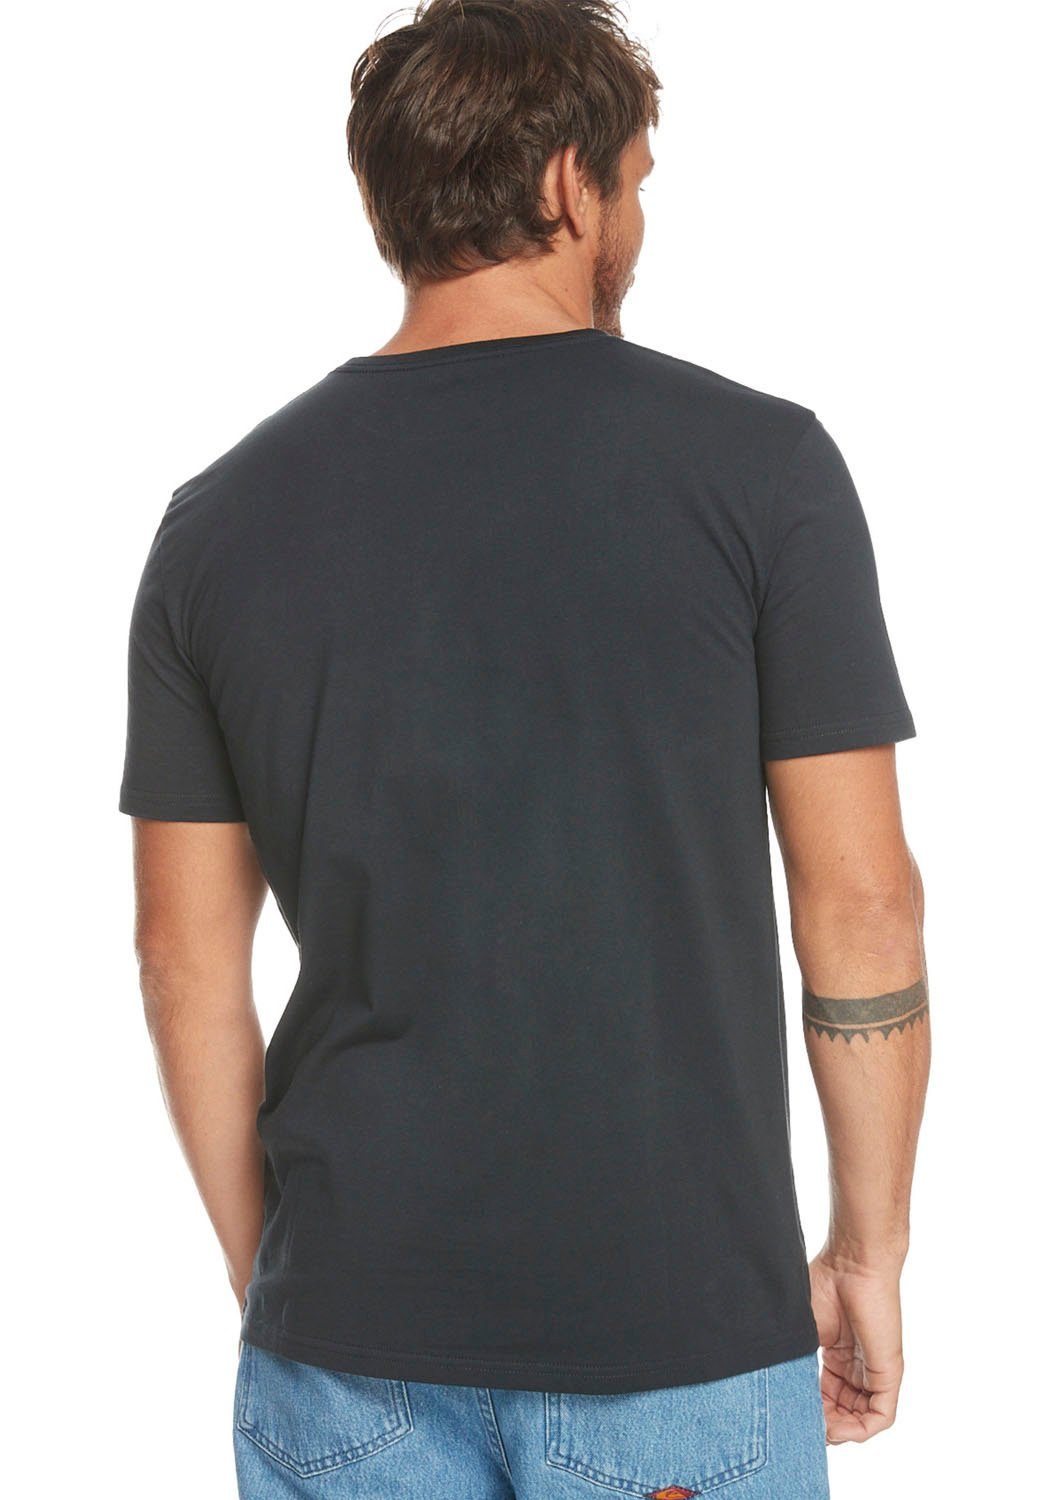 T-Shirt TEES GRADIENTLINE KVJ0 Quiksilver Black